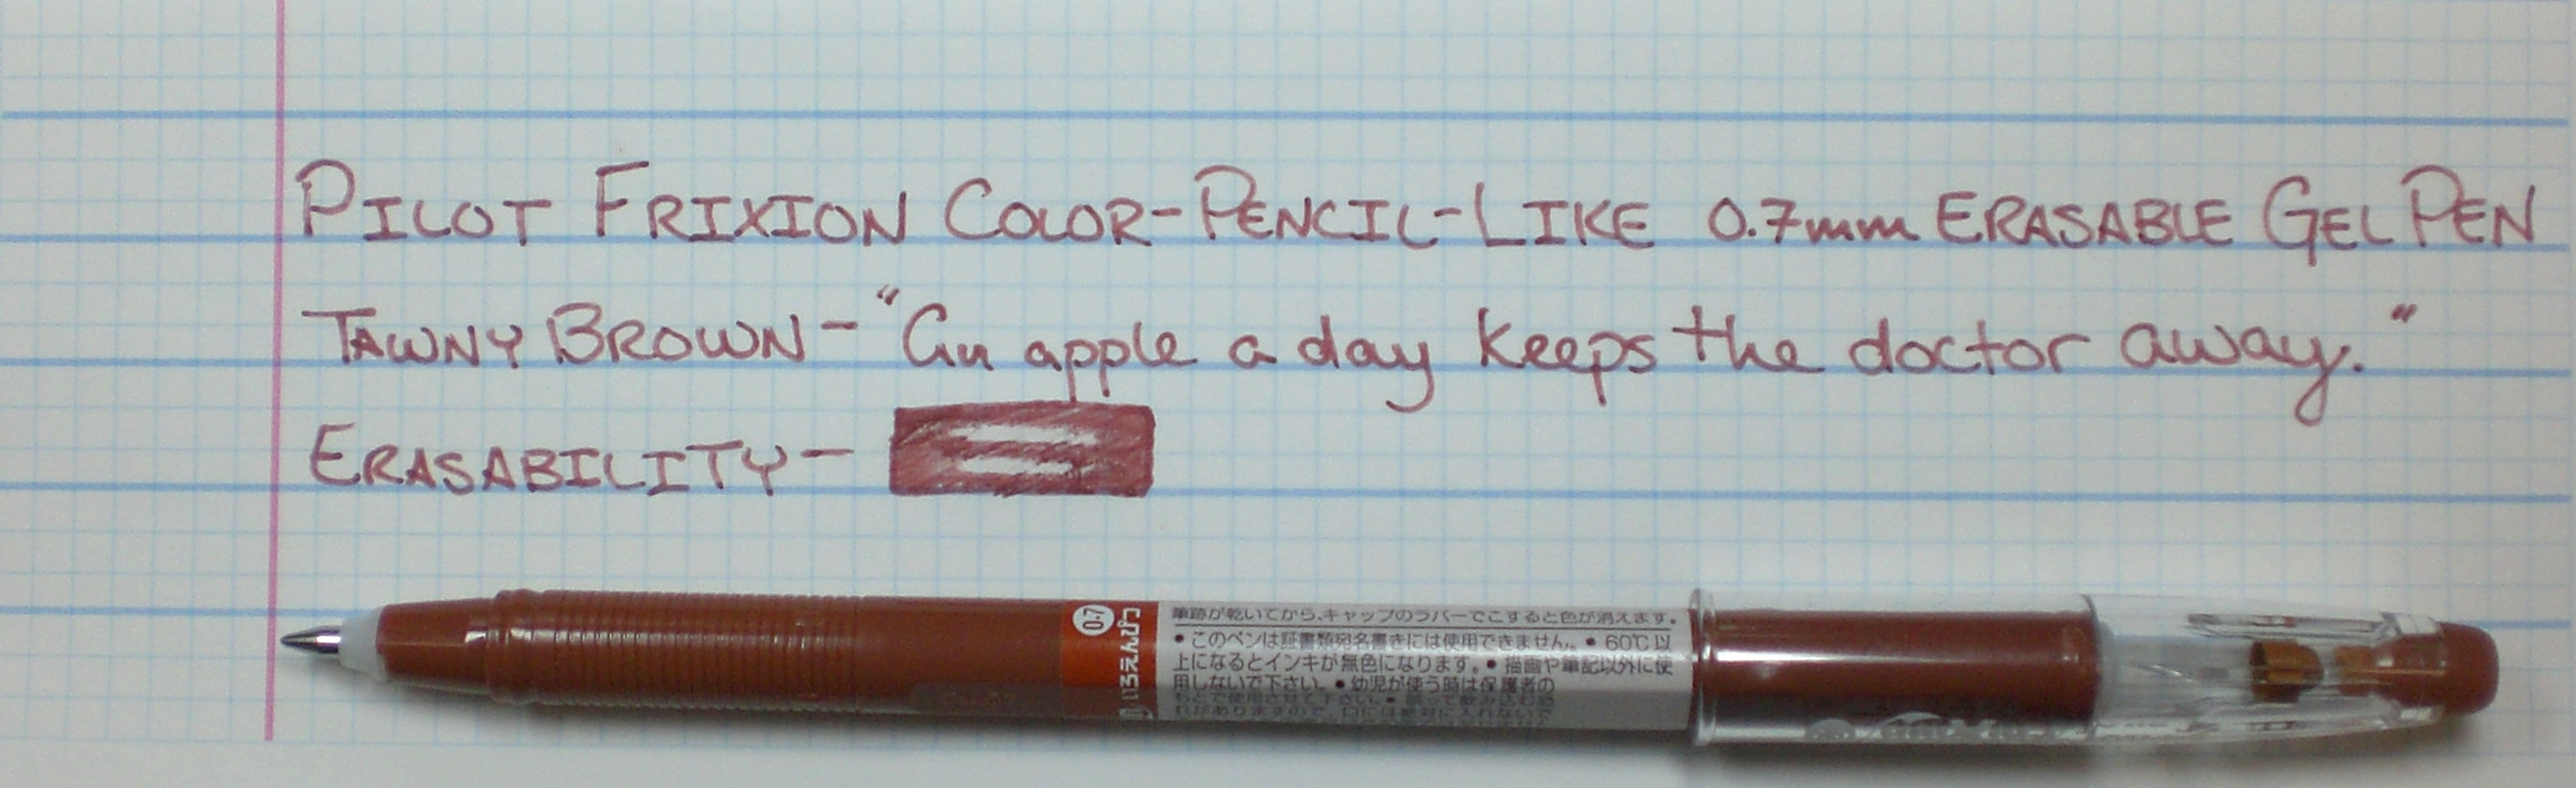 Pilot Frixion Color-Pencil-Like 0.7mm Erasable Gel Pen – Tawny Brown